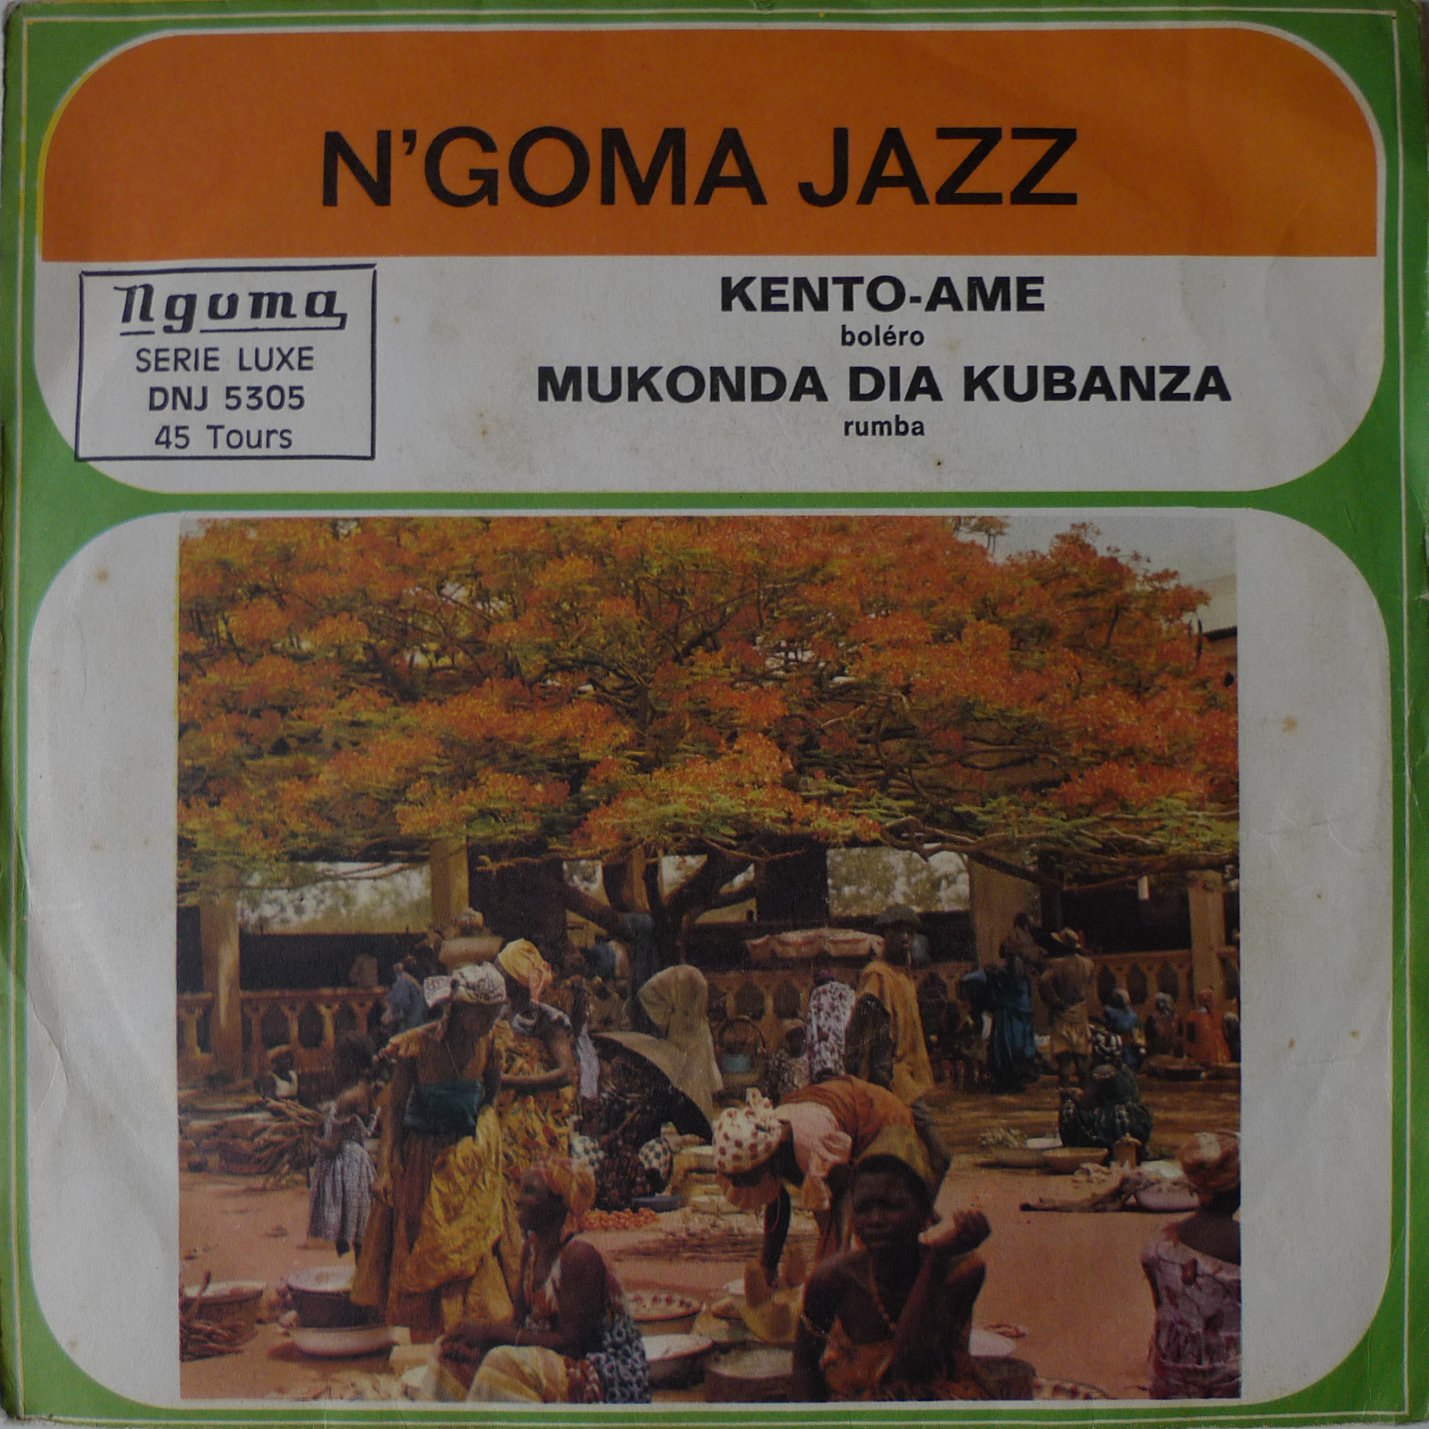  N'goma Jazz - "Kento-ame Mukonda dia kubanza"  N%27goma+jazz+A